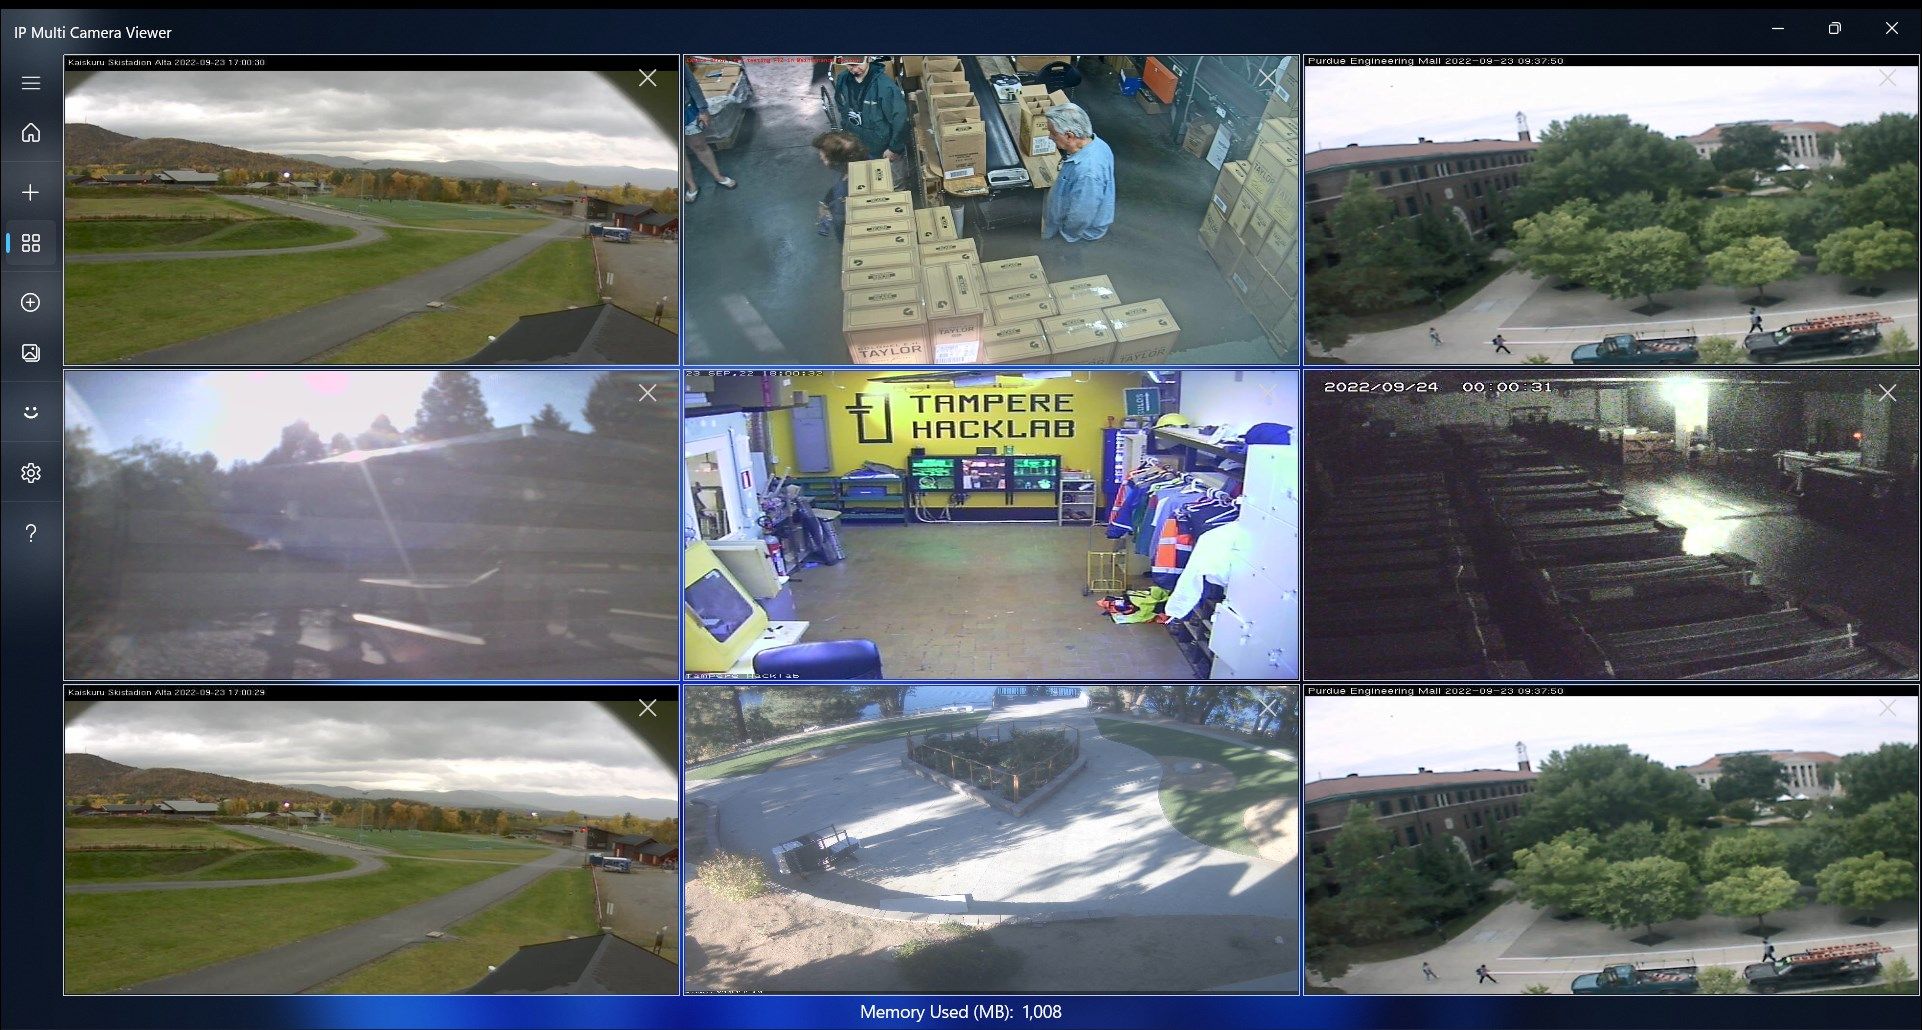 IP Multi Camera Viewer